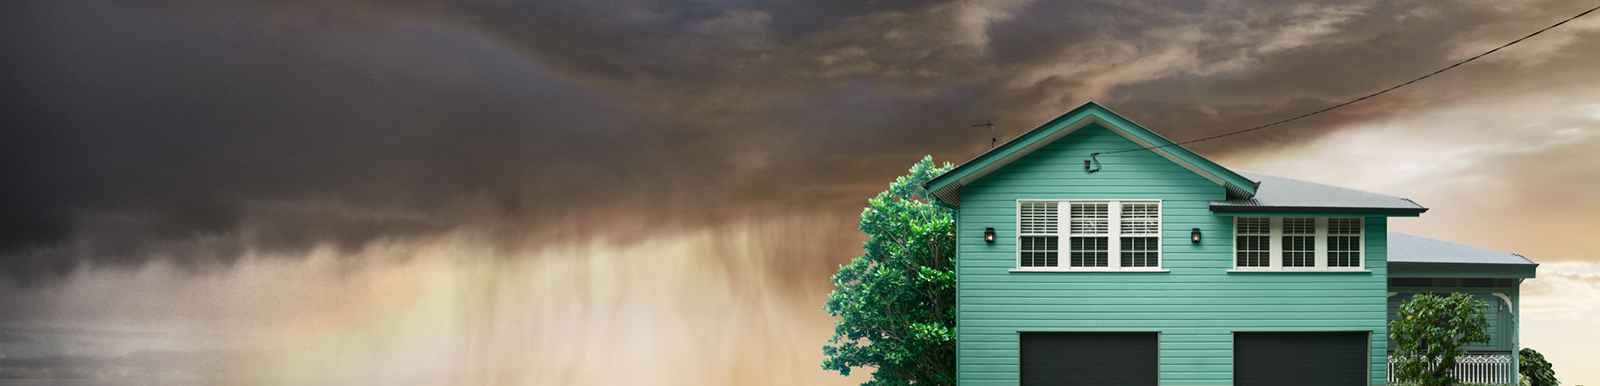 House with a rainy sky background